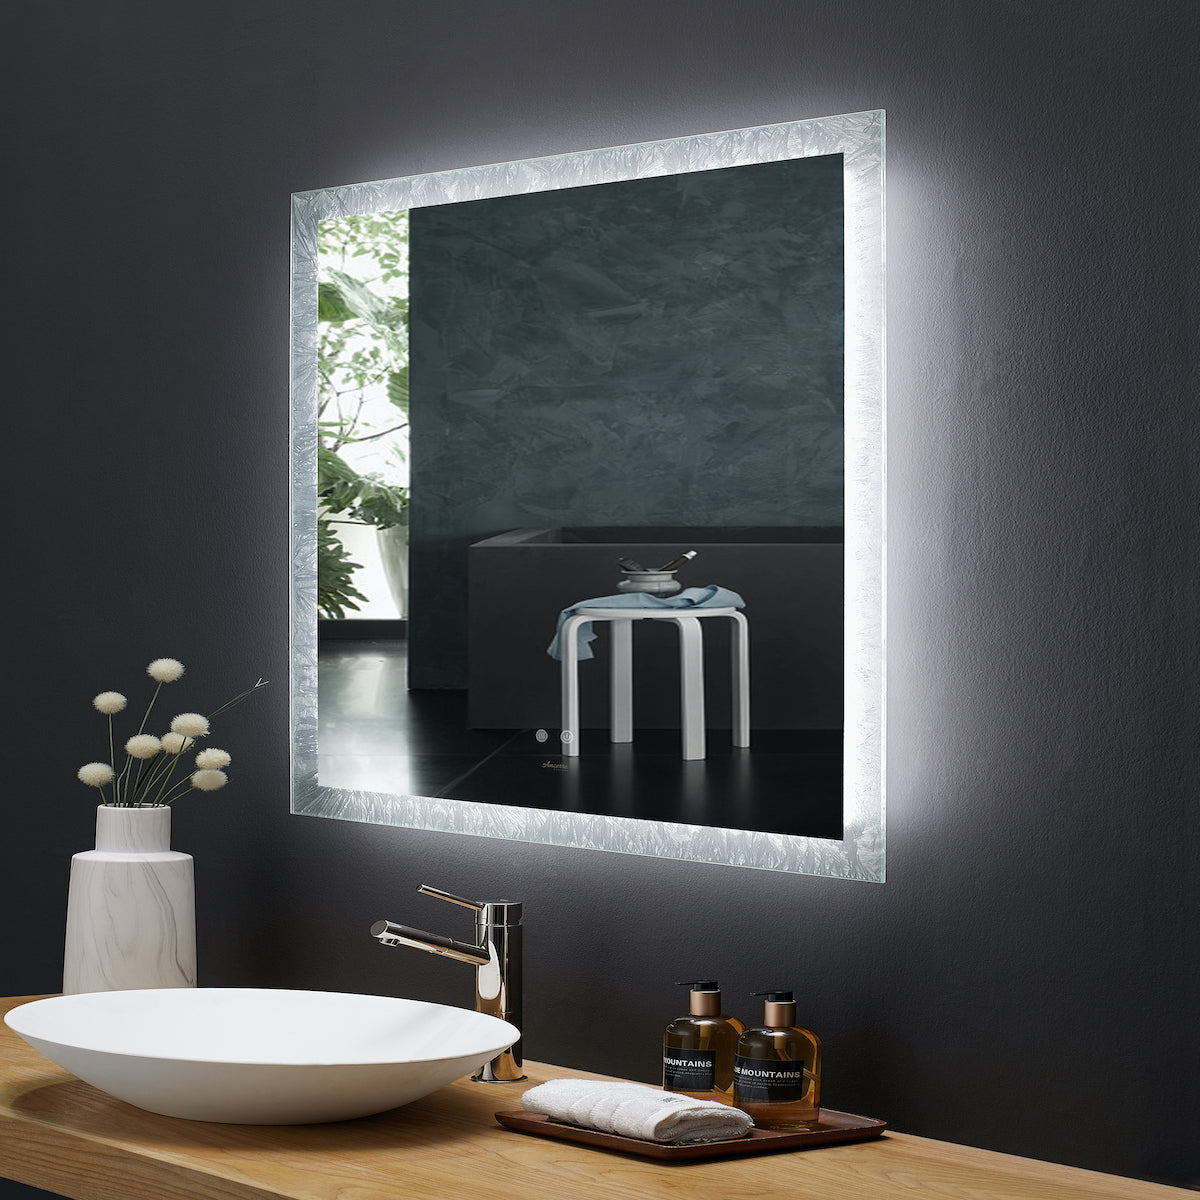 Ancerre Designs 30" LED Frysta Mirror LEDM-FRYSTA-30 Angle